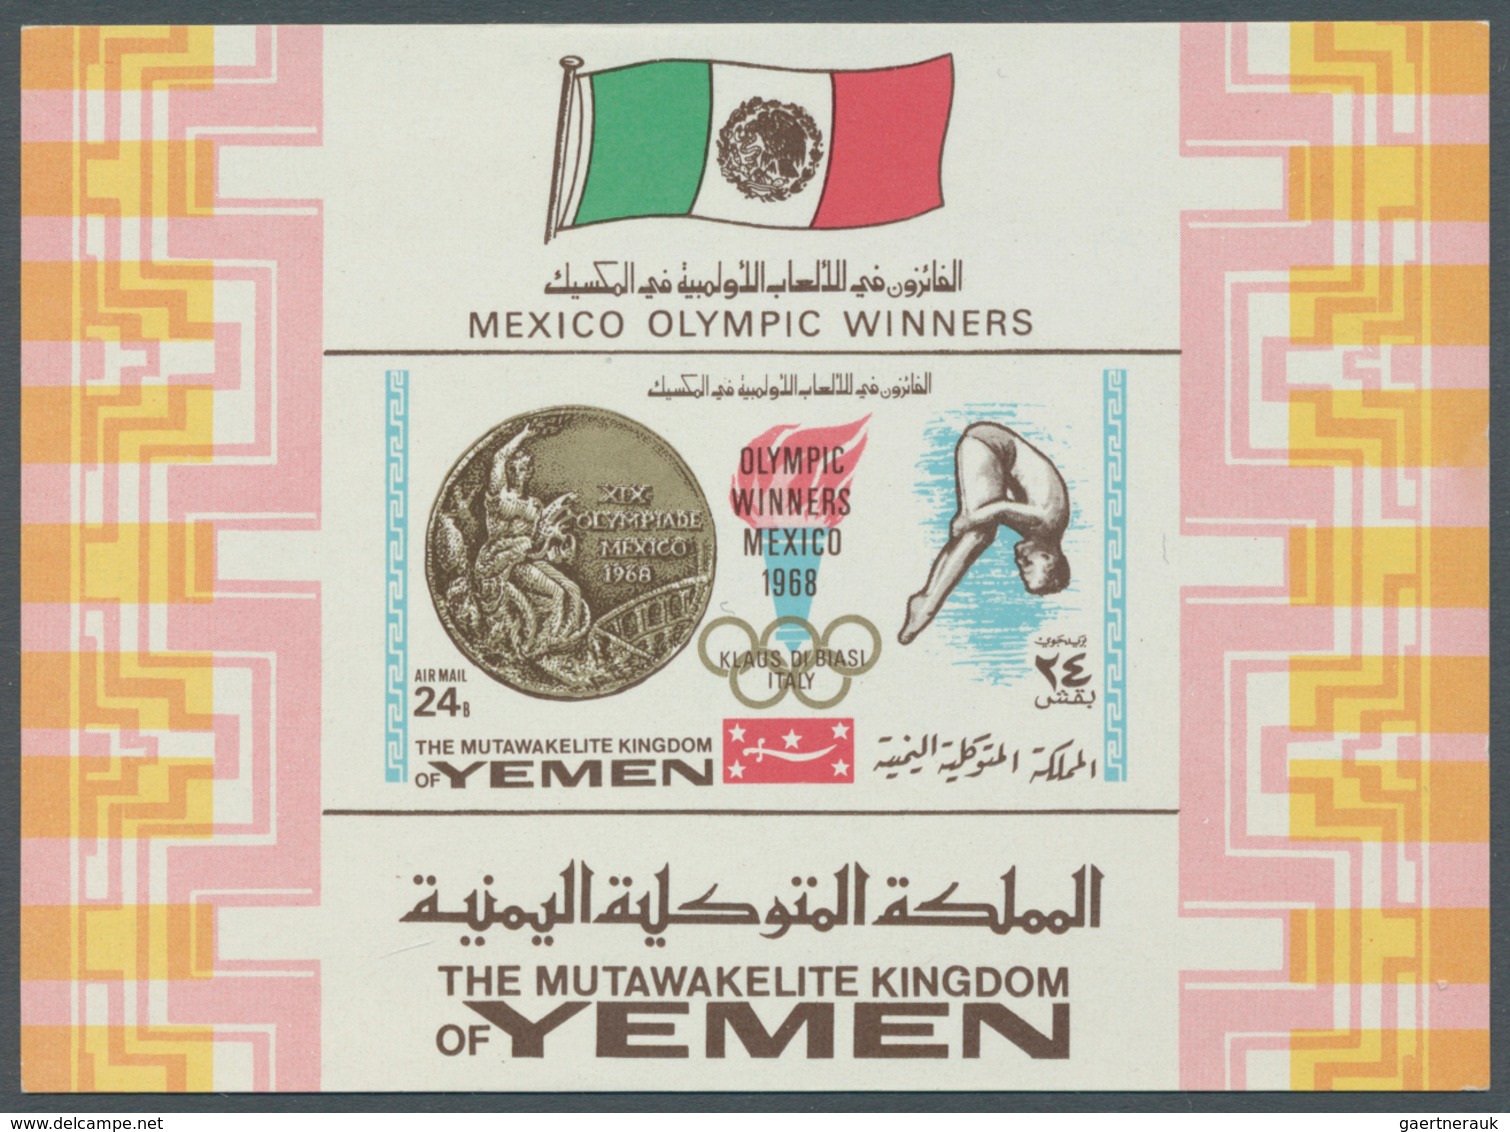 Jemen - Königreich: 1965/1970, mainly MNH balance incl. mini sheets, souvenir sheets, thematic issue